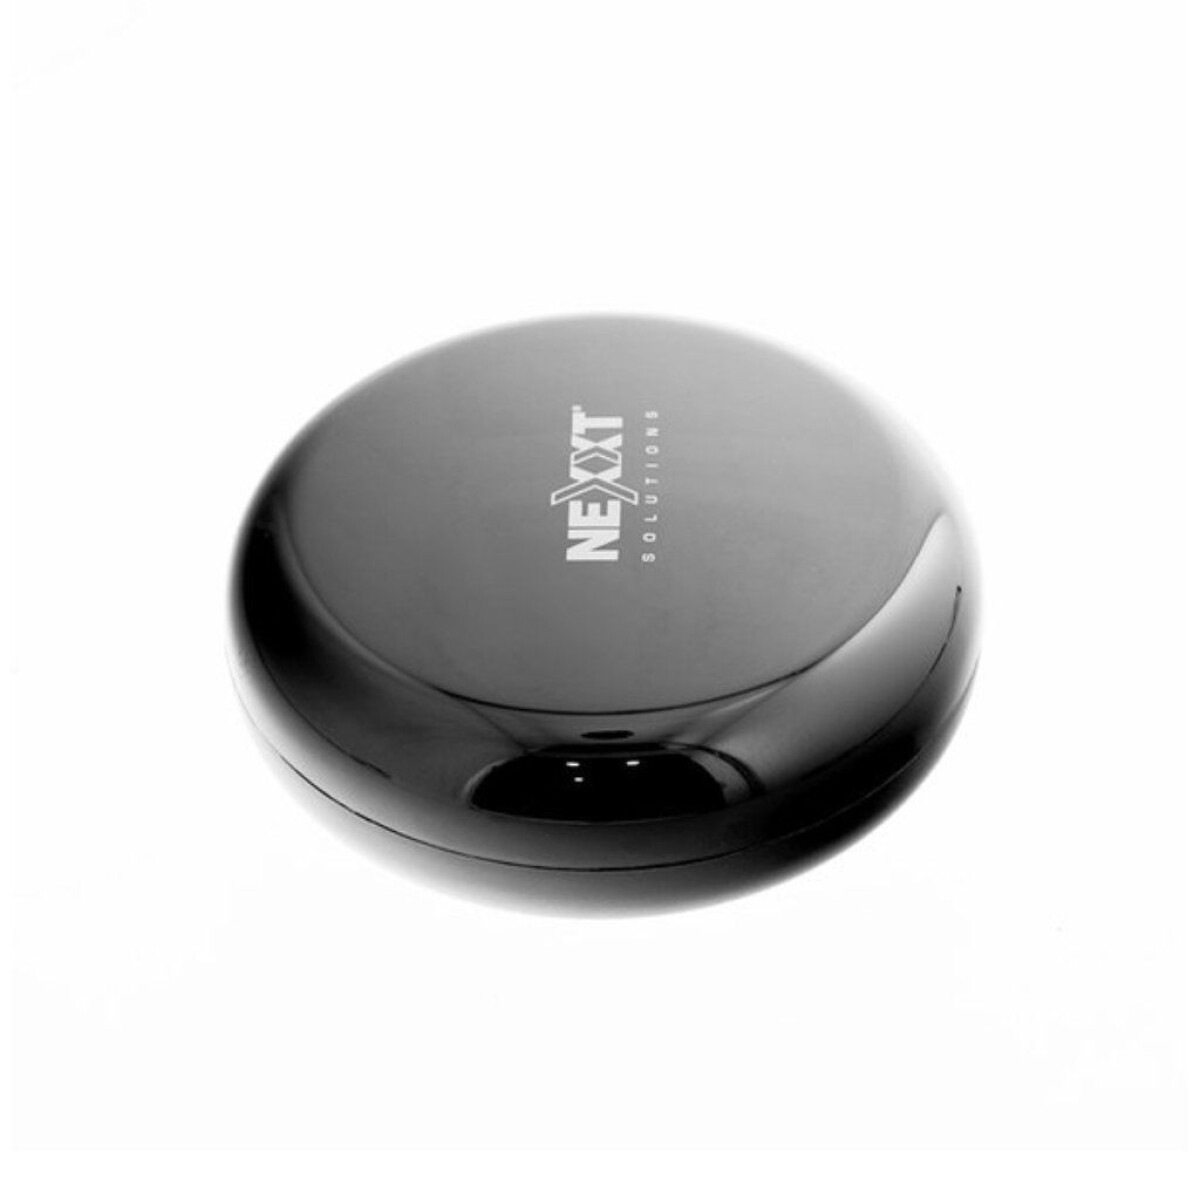 Control remoto smart universal nexxt home wi-fi ir nha-i600 Black